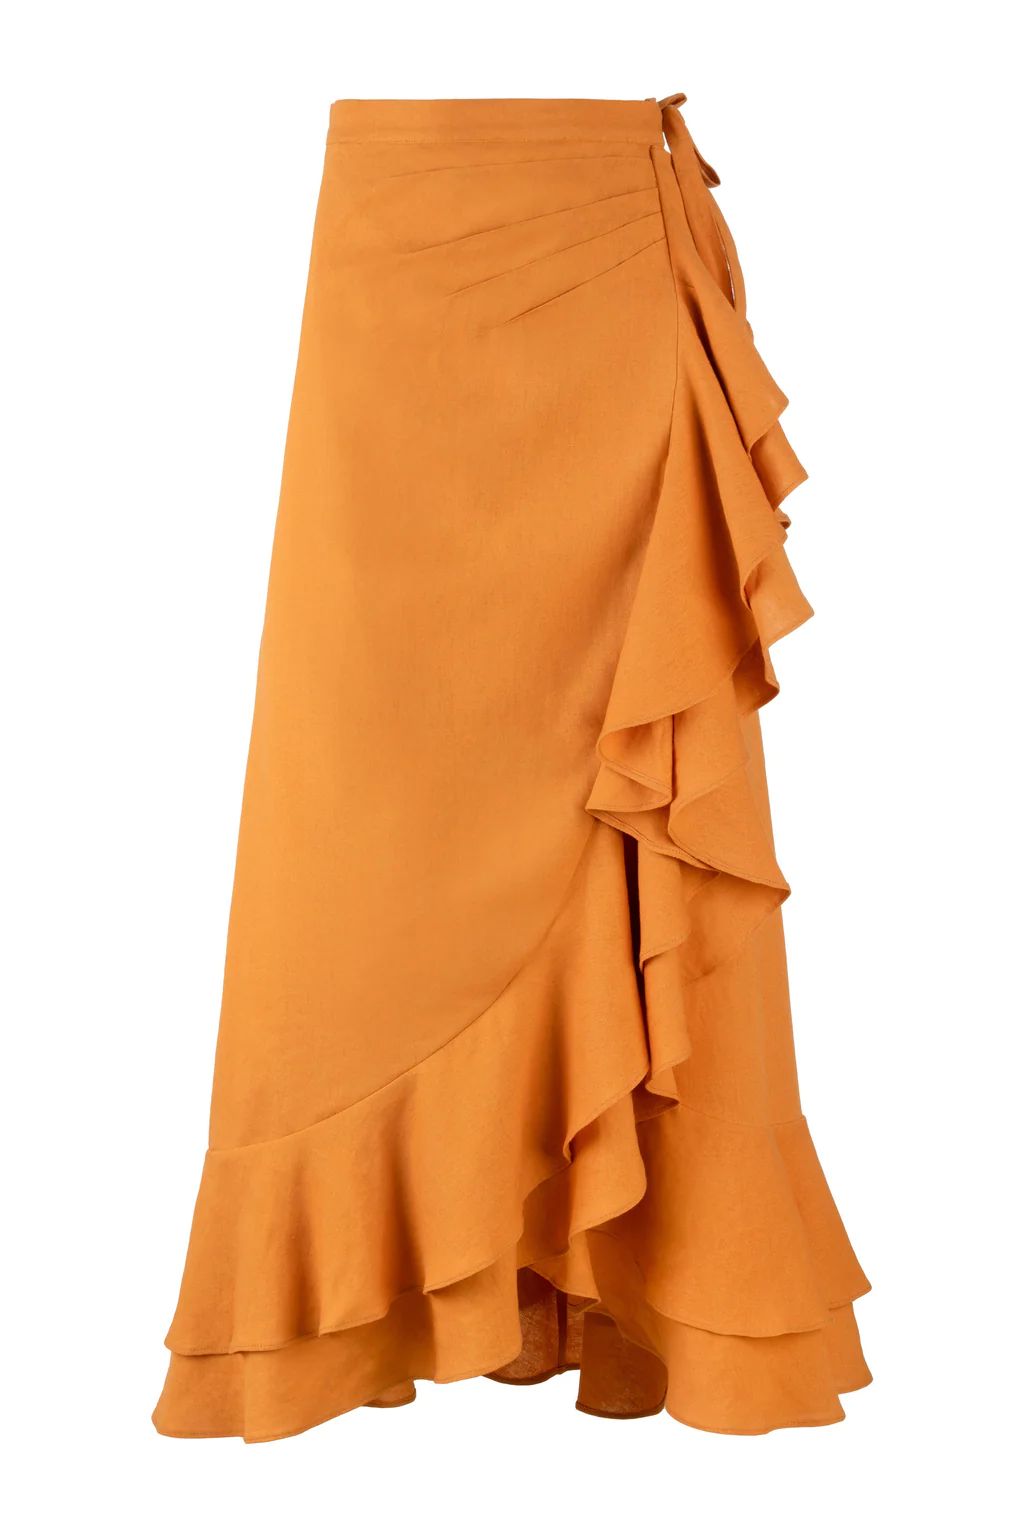 Golestan Ruffle Skirt - Canary | Rosewater Collective